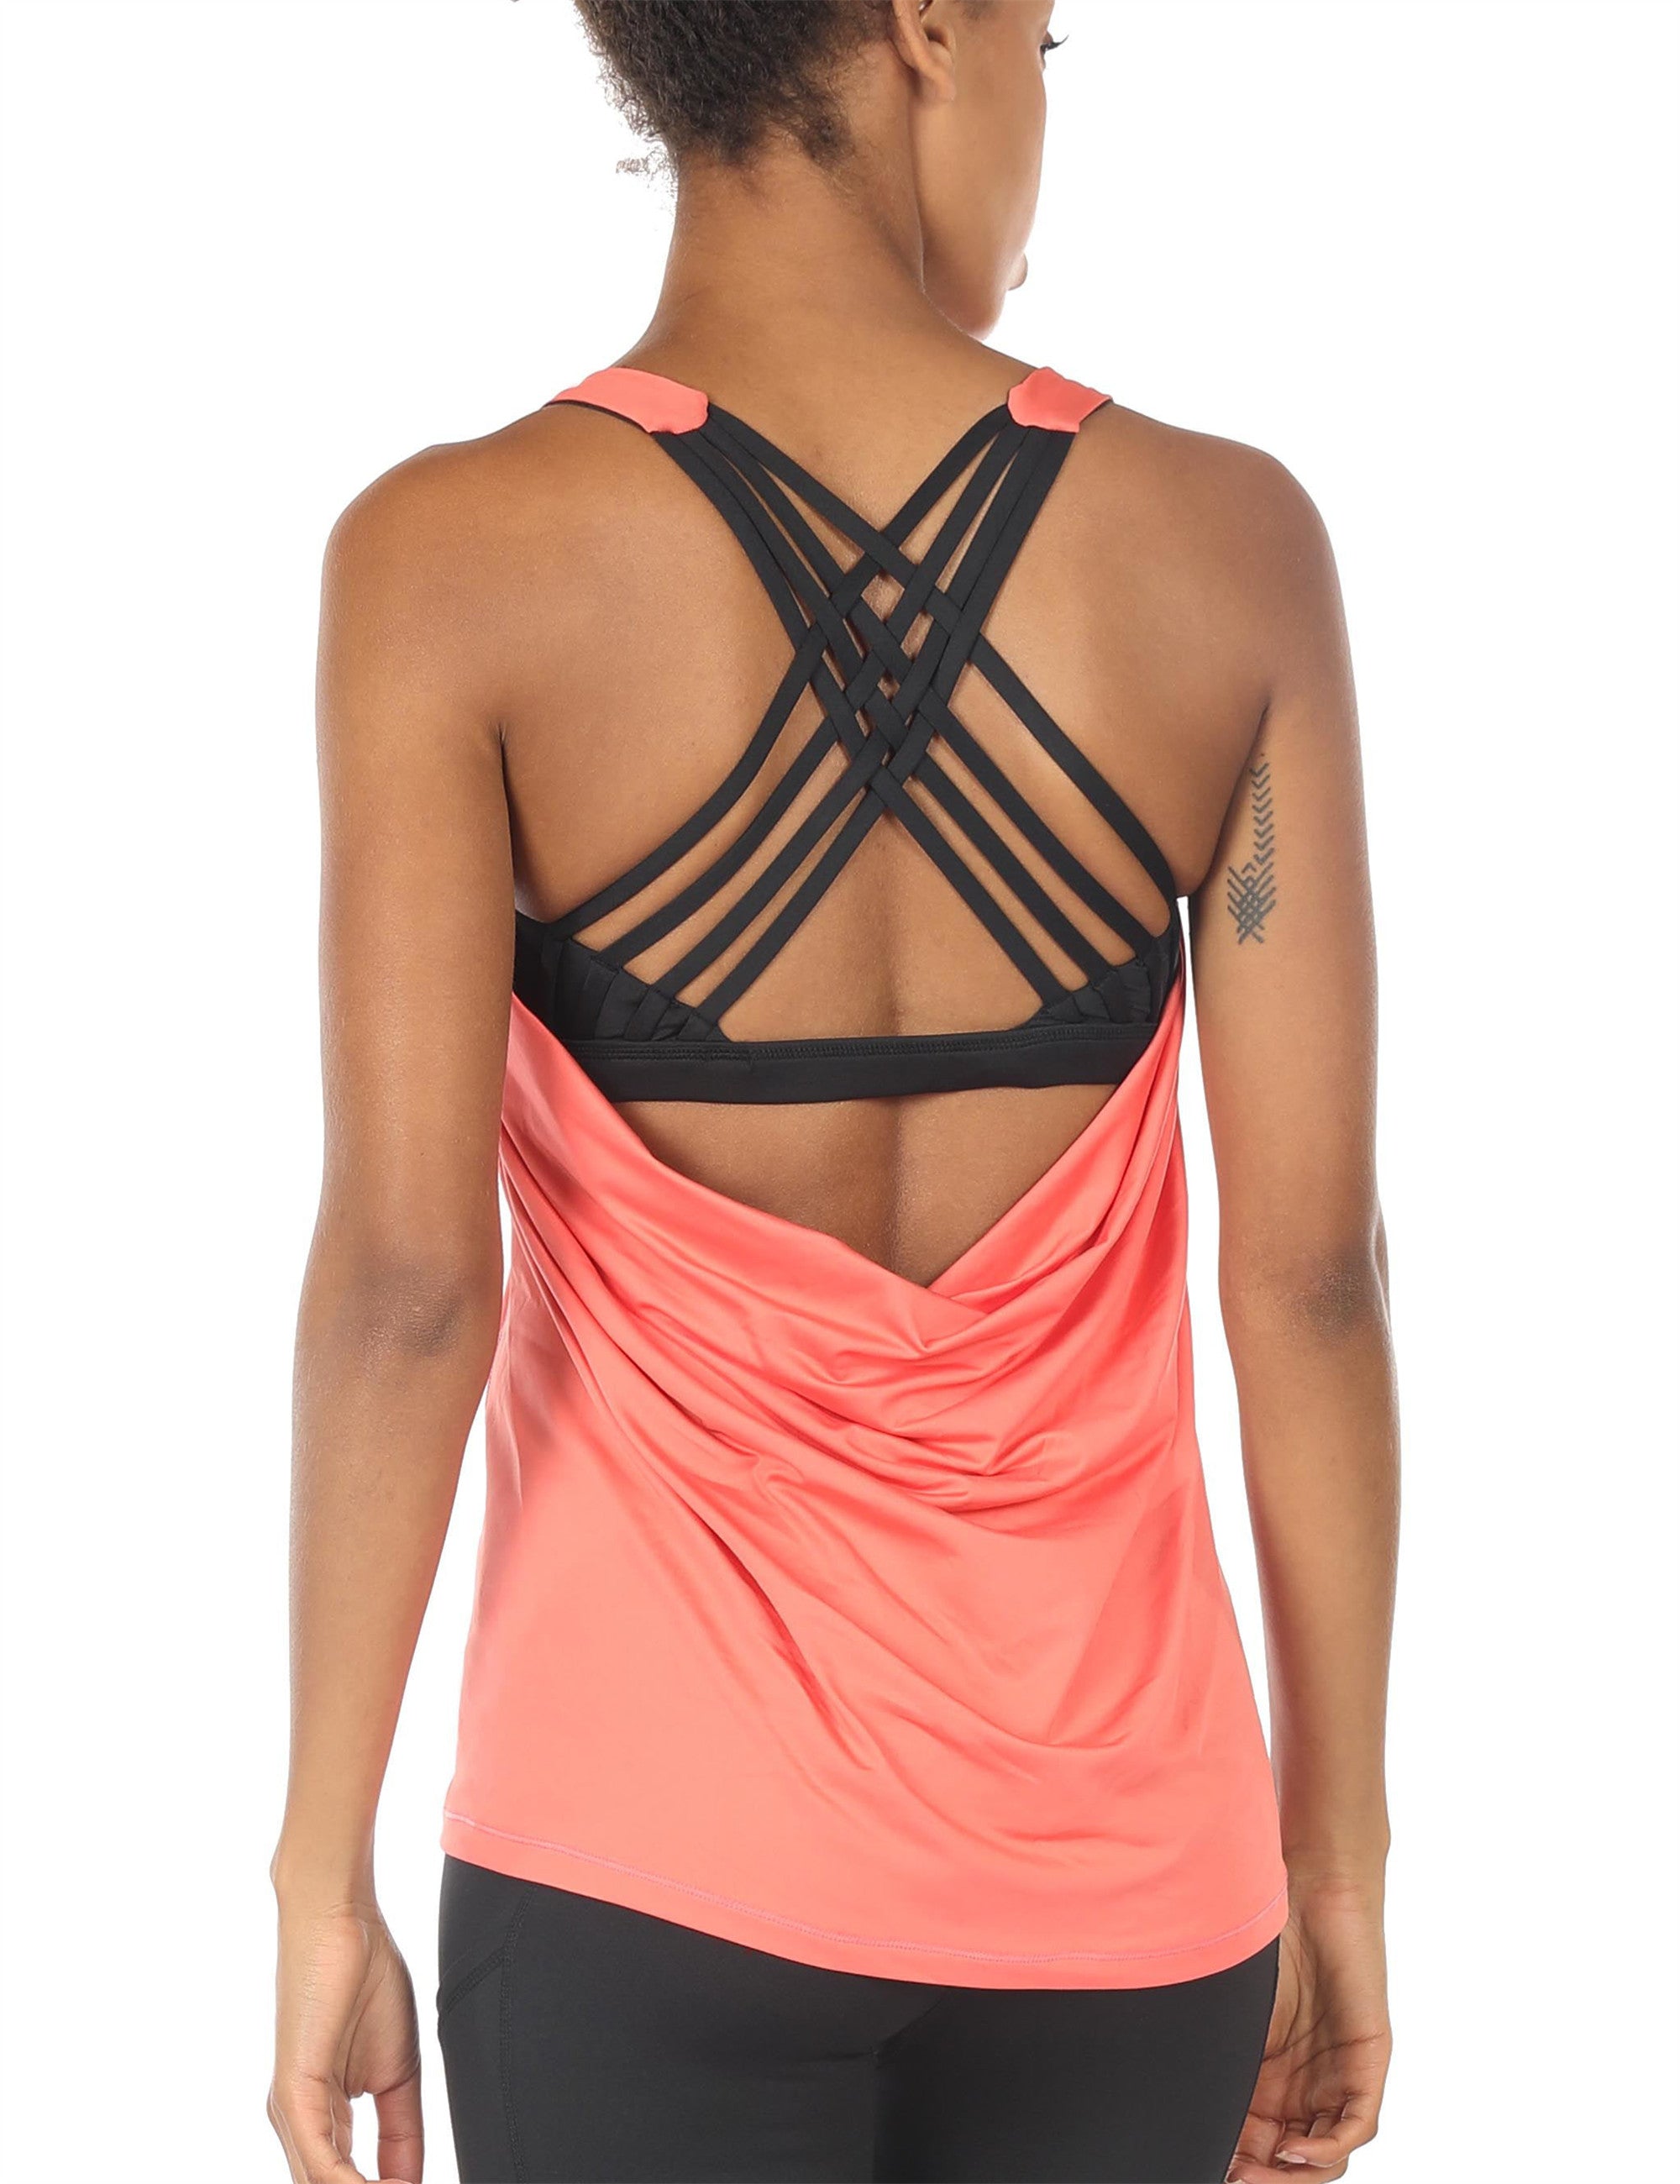 Yoga Top with Bra Cross Back 2 In 1 Set Sleeveless Yoga Shirt Singlet Women  Tank Top Gym Running Training Fitness Sport Tops